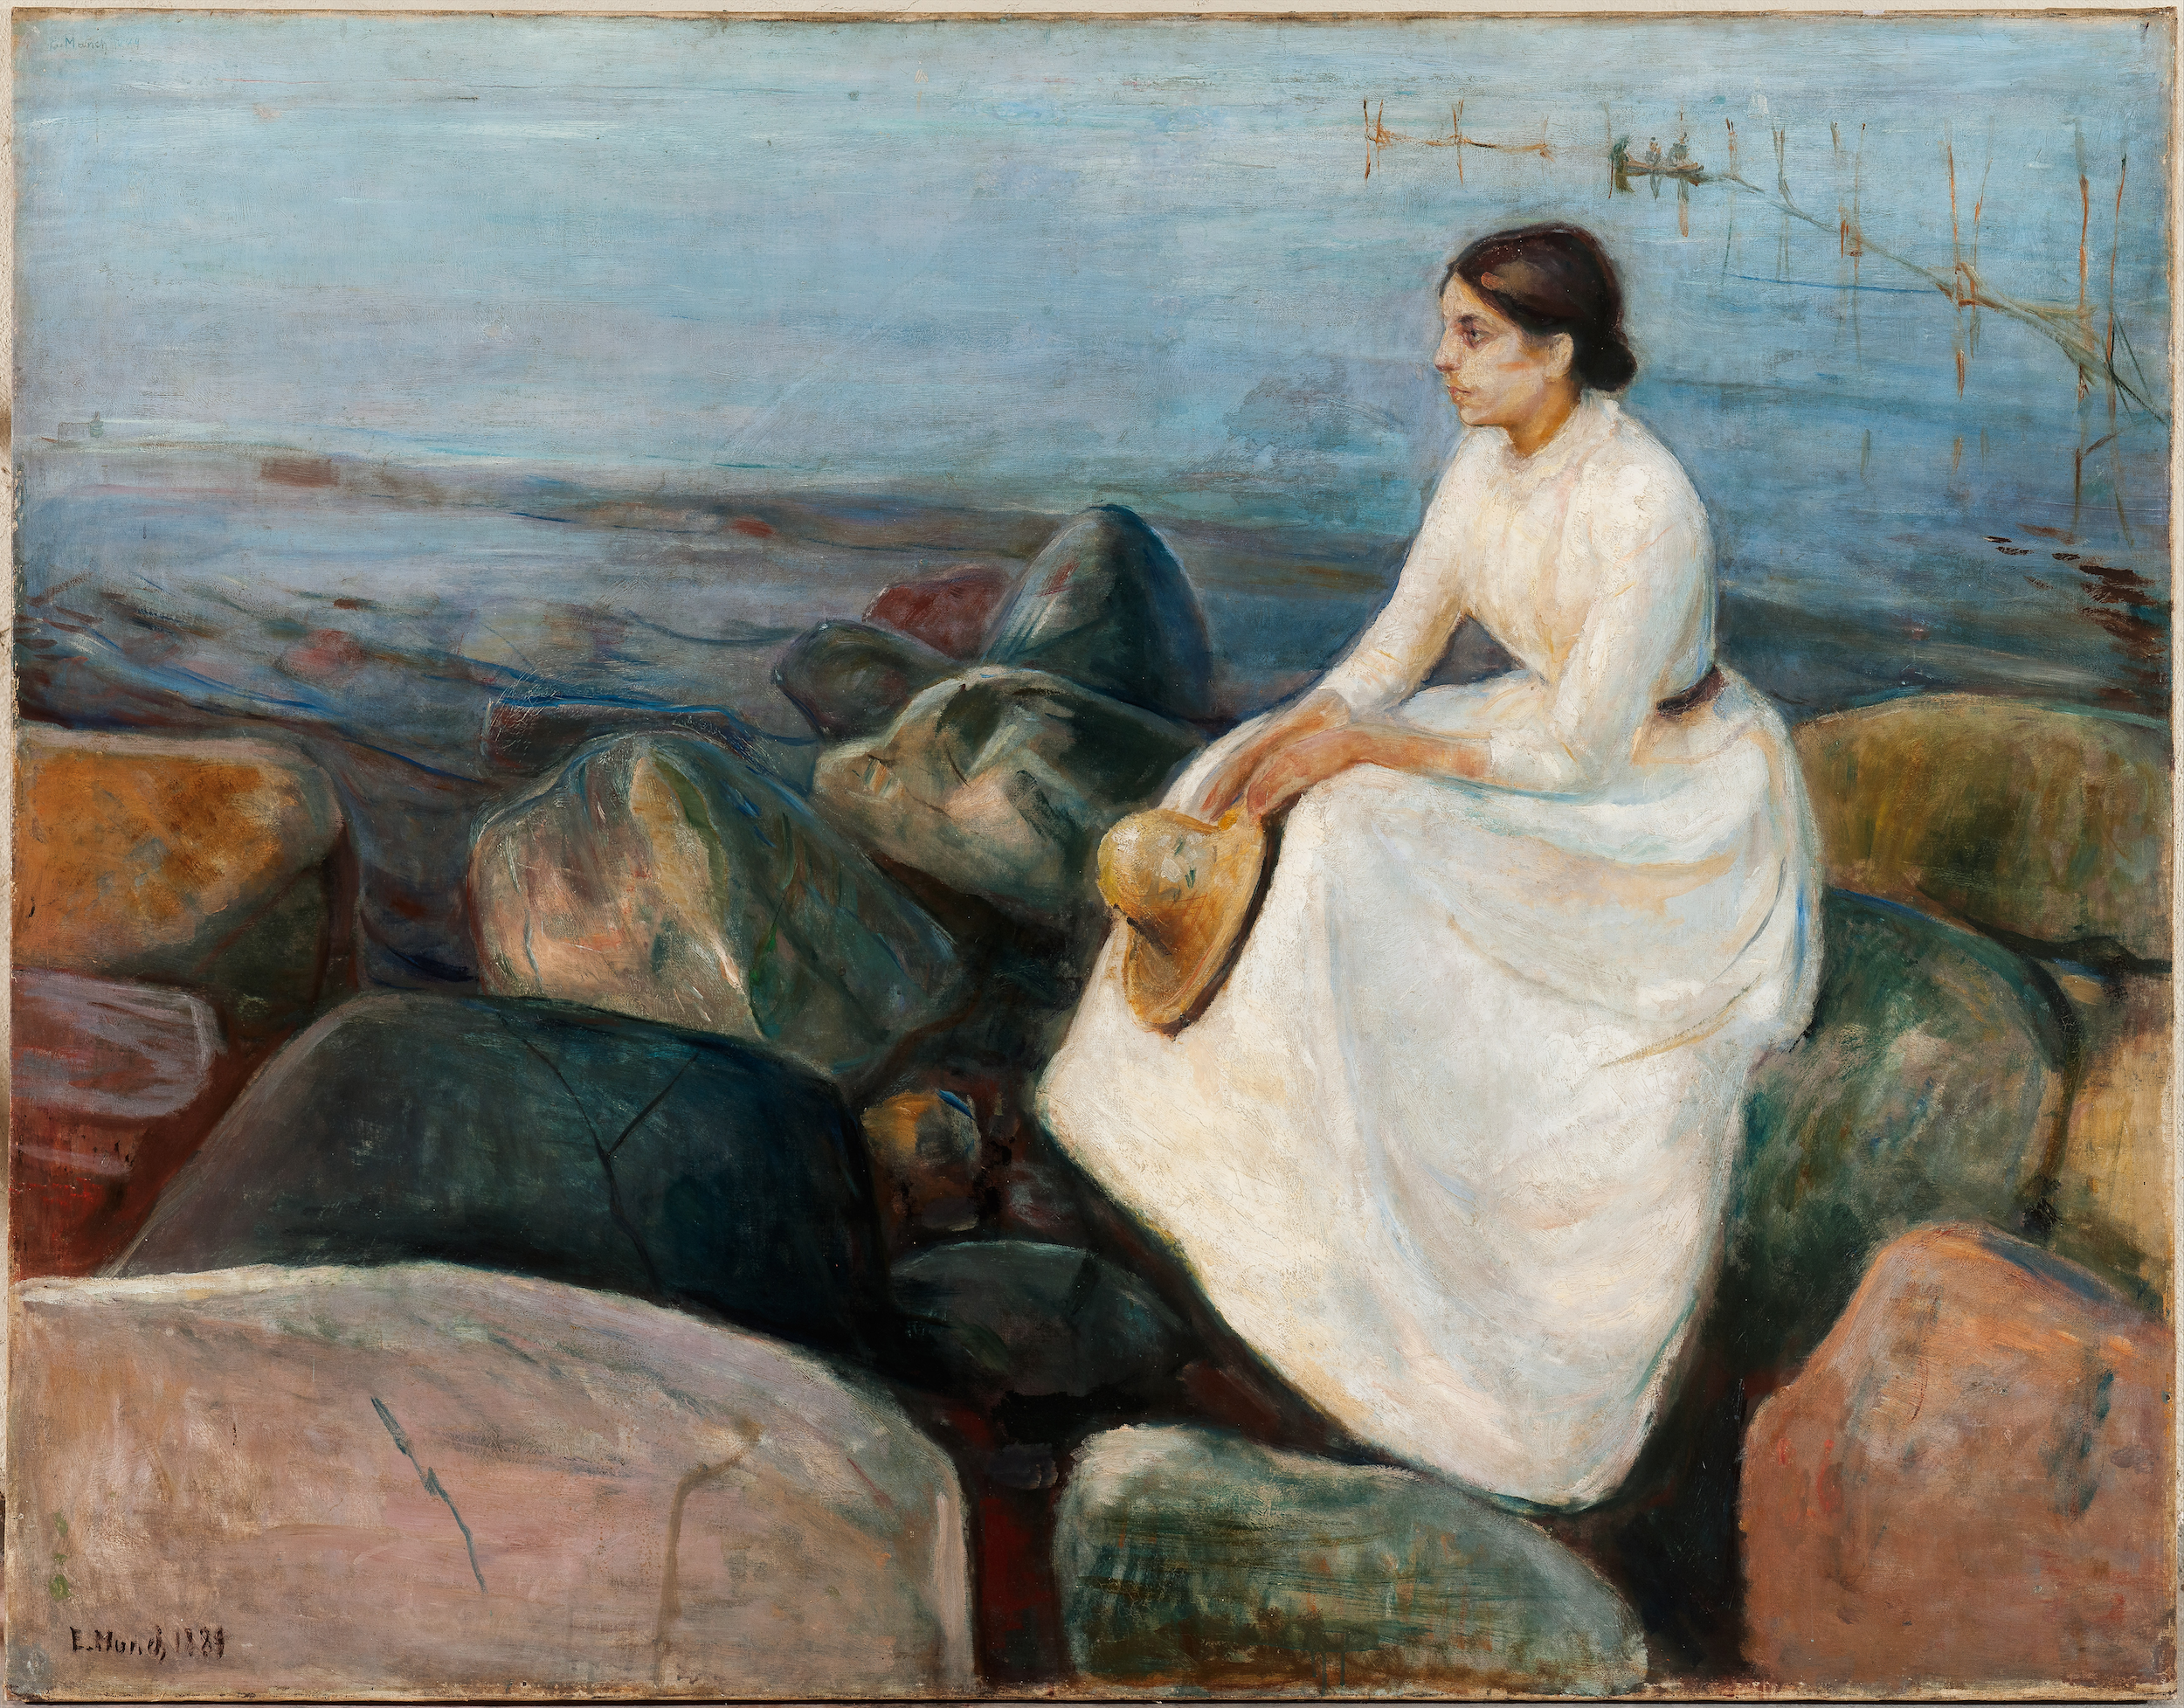 Sommernacht, Inger am Strand by Edvard Munch - 1889 - 126.5 x 161.5 cm Europeana Foundation